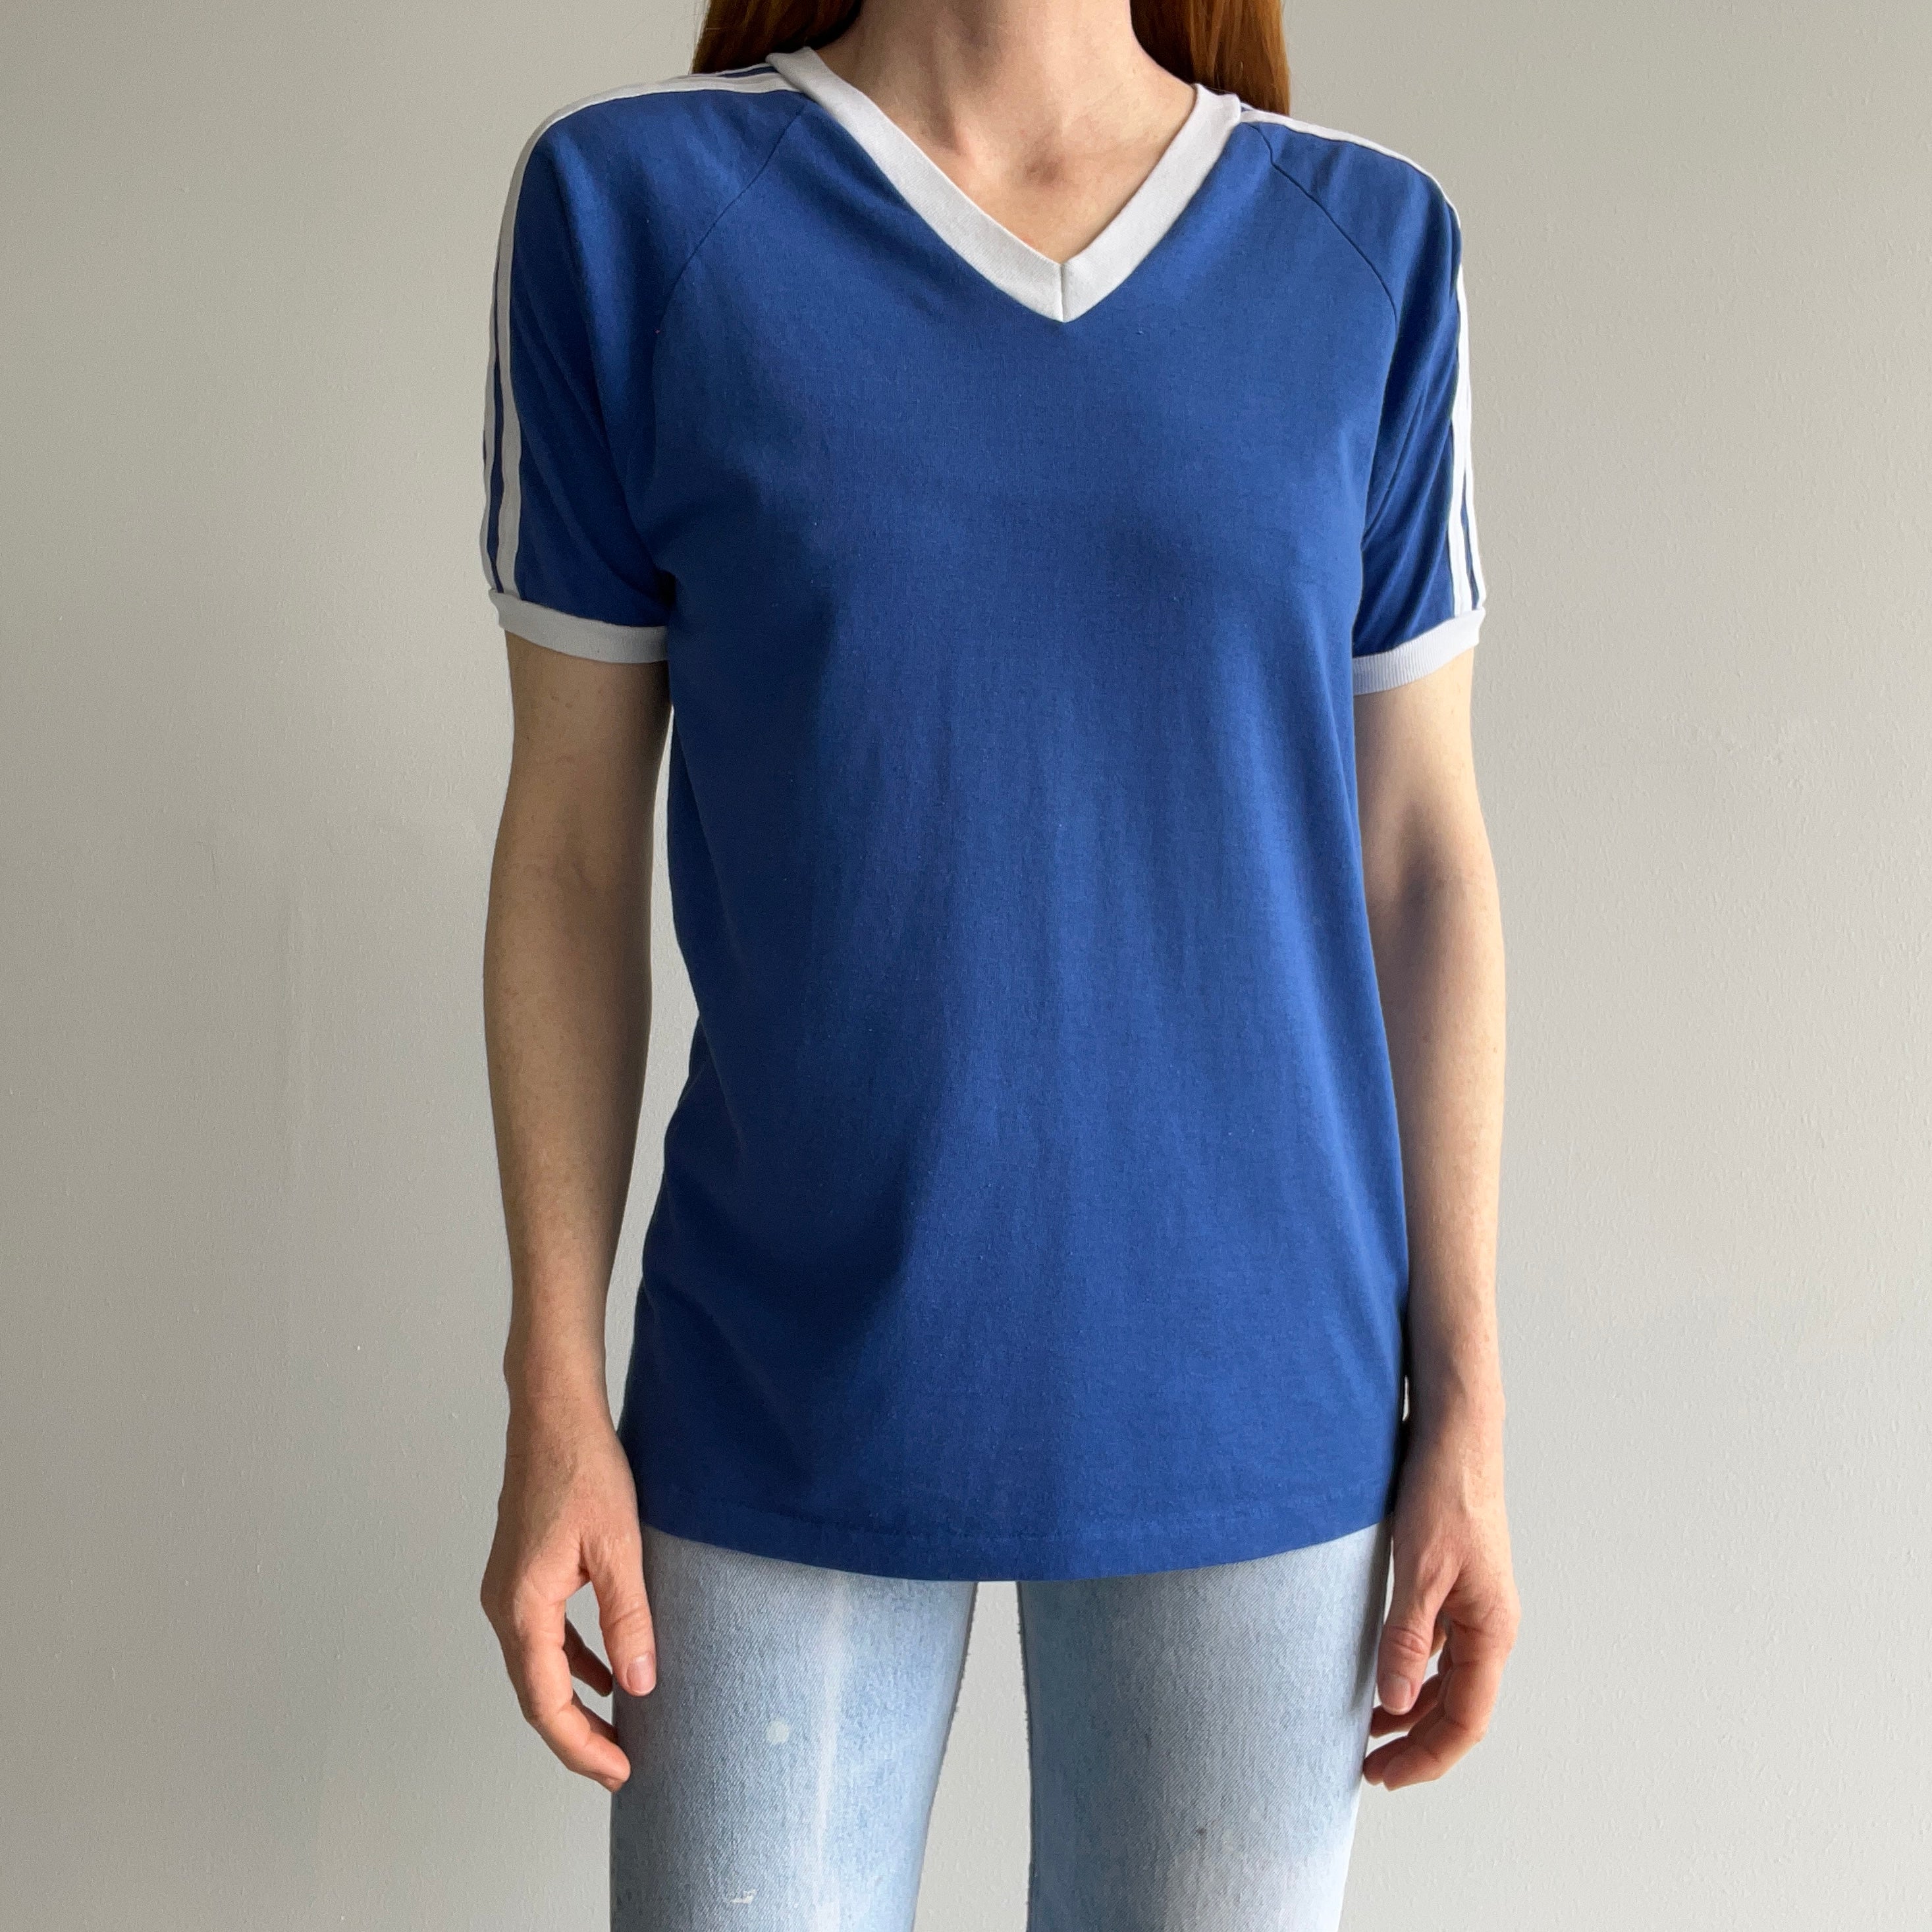 1970/80s Royal Blue and White V-Neck Triple Stripe T-Shirt